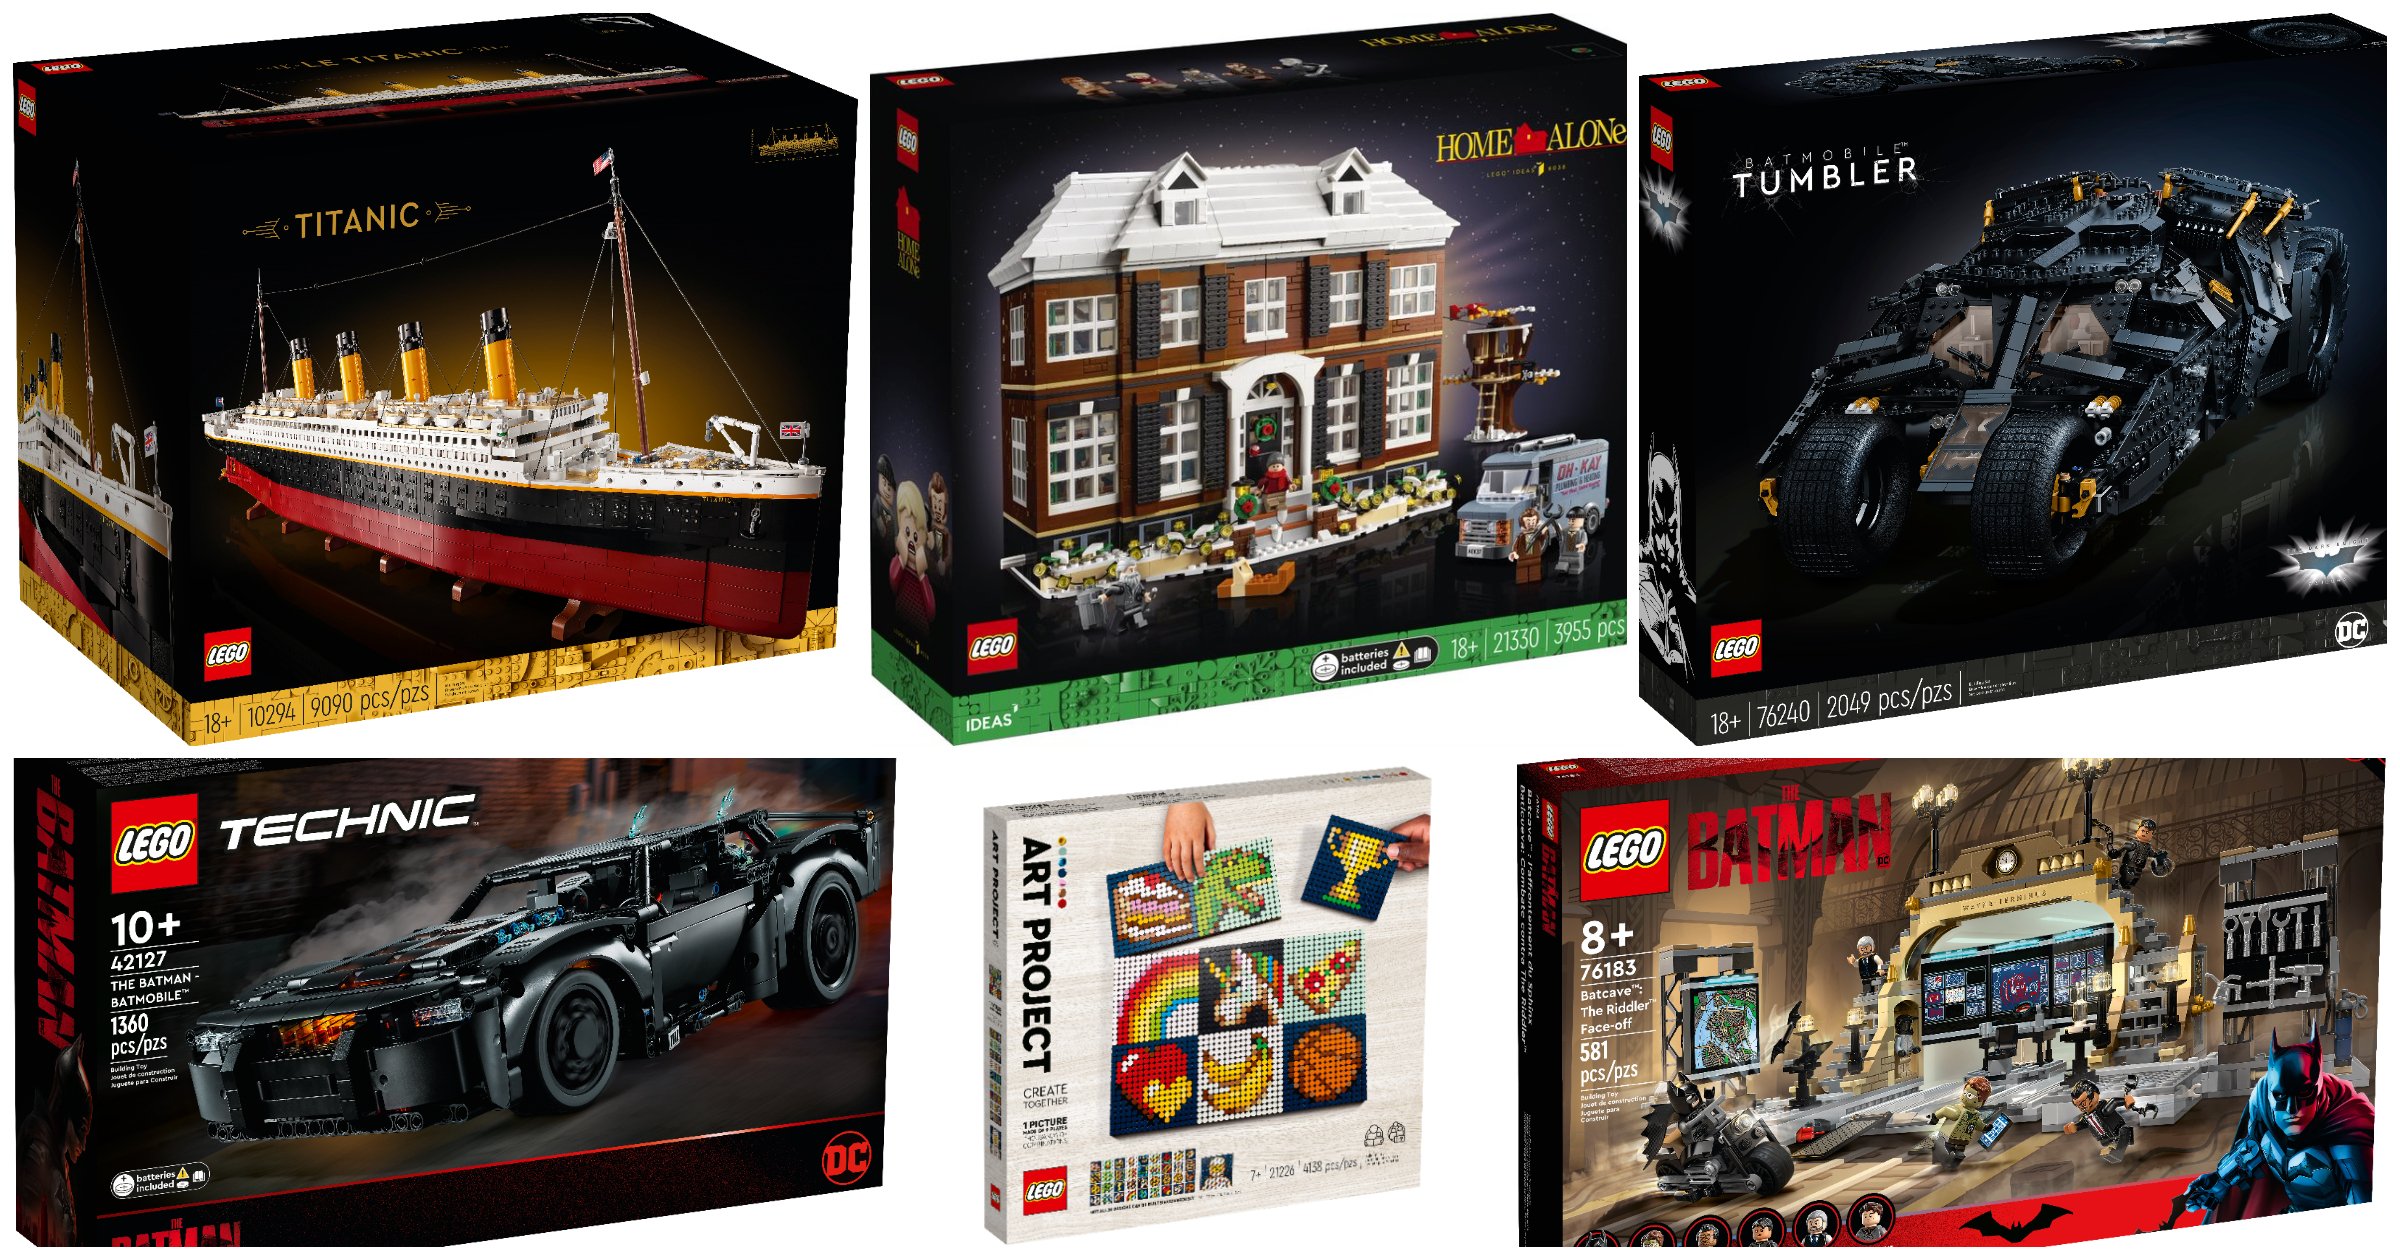 https://images.squarespace-cdn.com/content/v1/51967abae4b0fe8d0161031f/1635738719870-TPSLYJP1FRKMK1LAPAFY/New+LEGO+Sets+November+2021+-+BrickNerd+-+Header.jpg